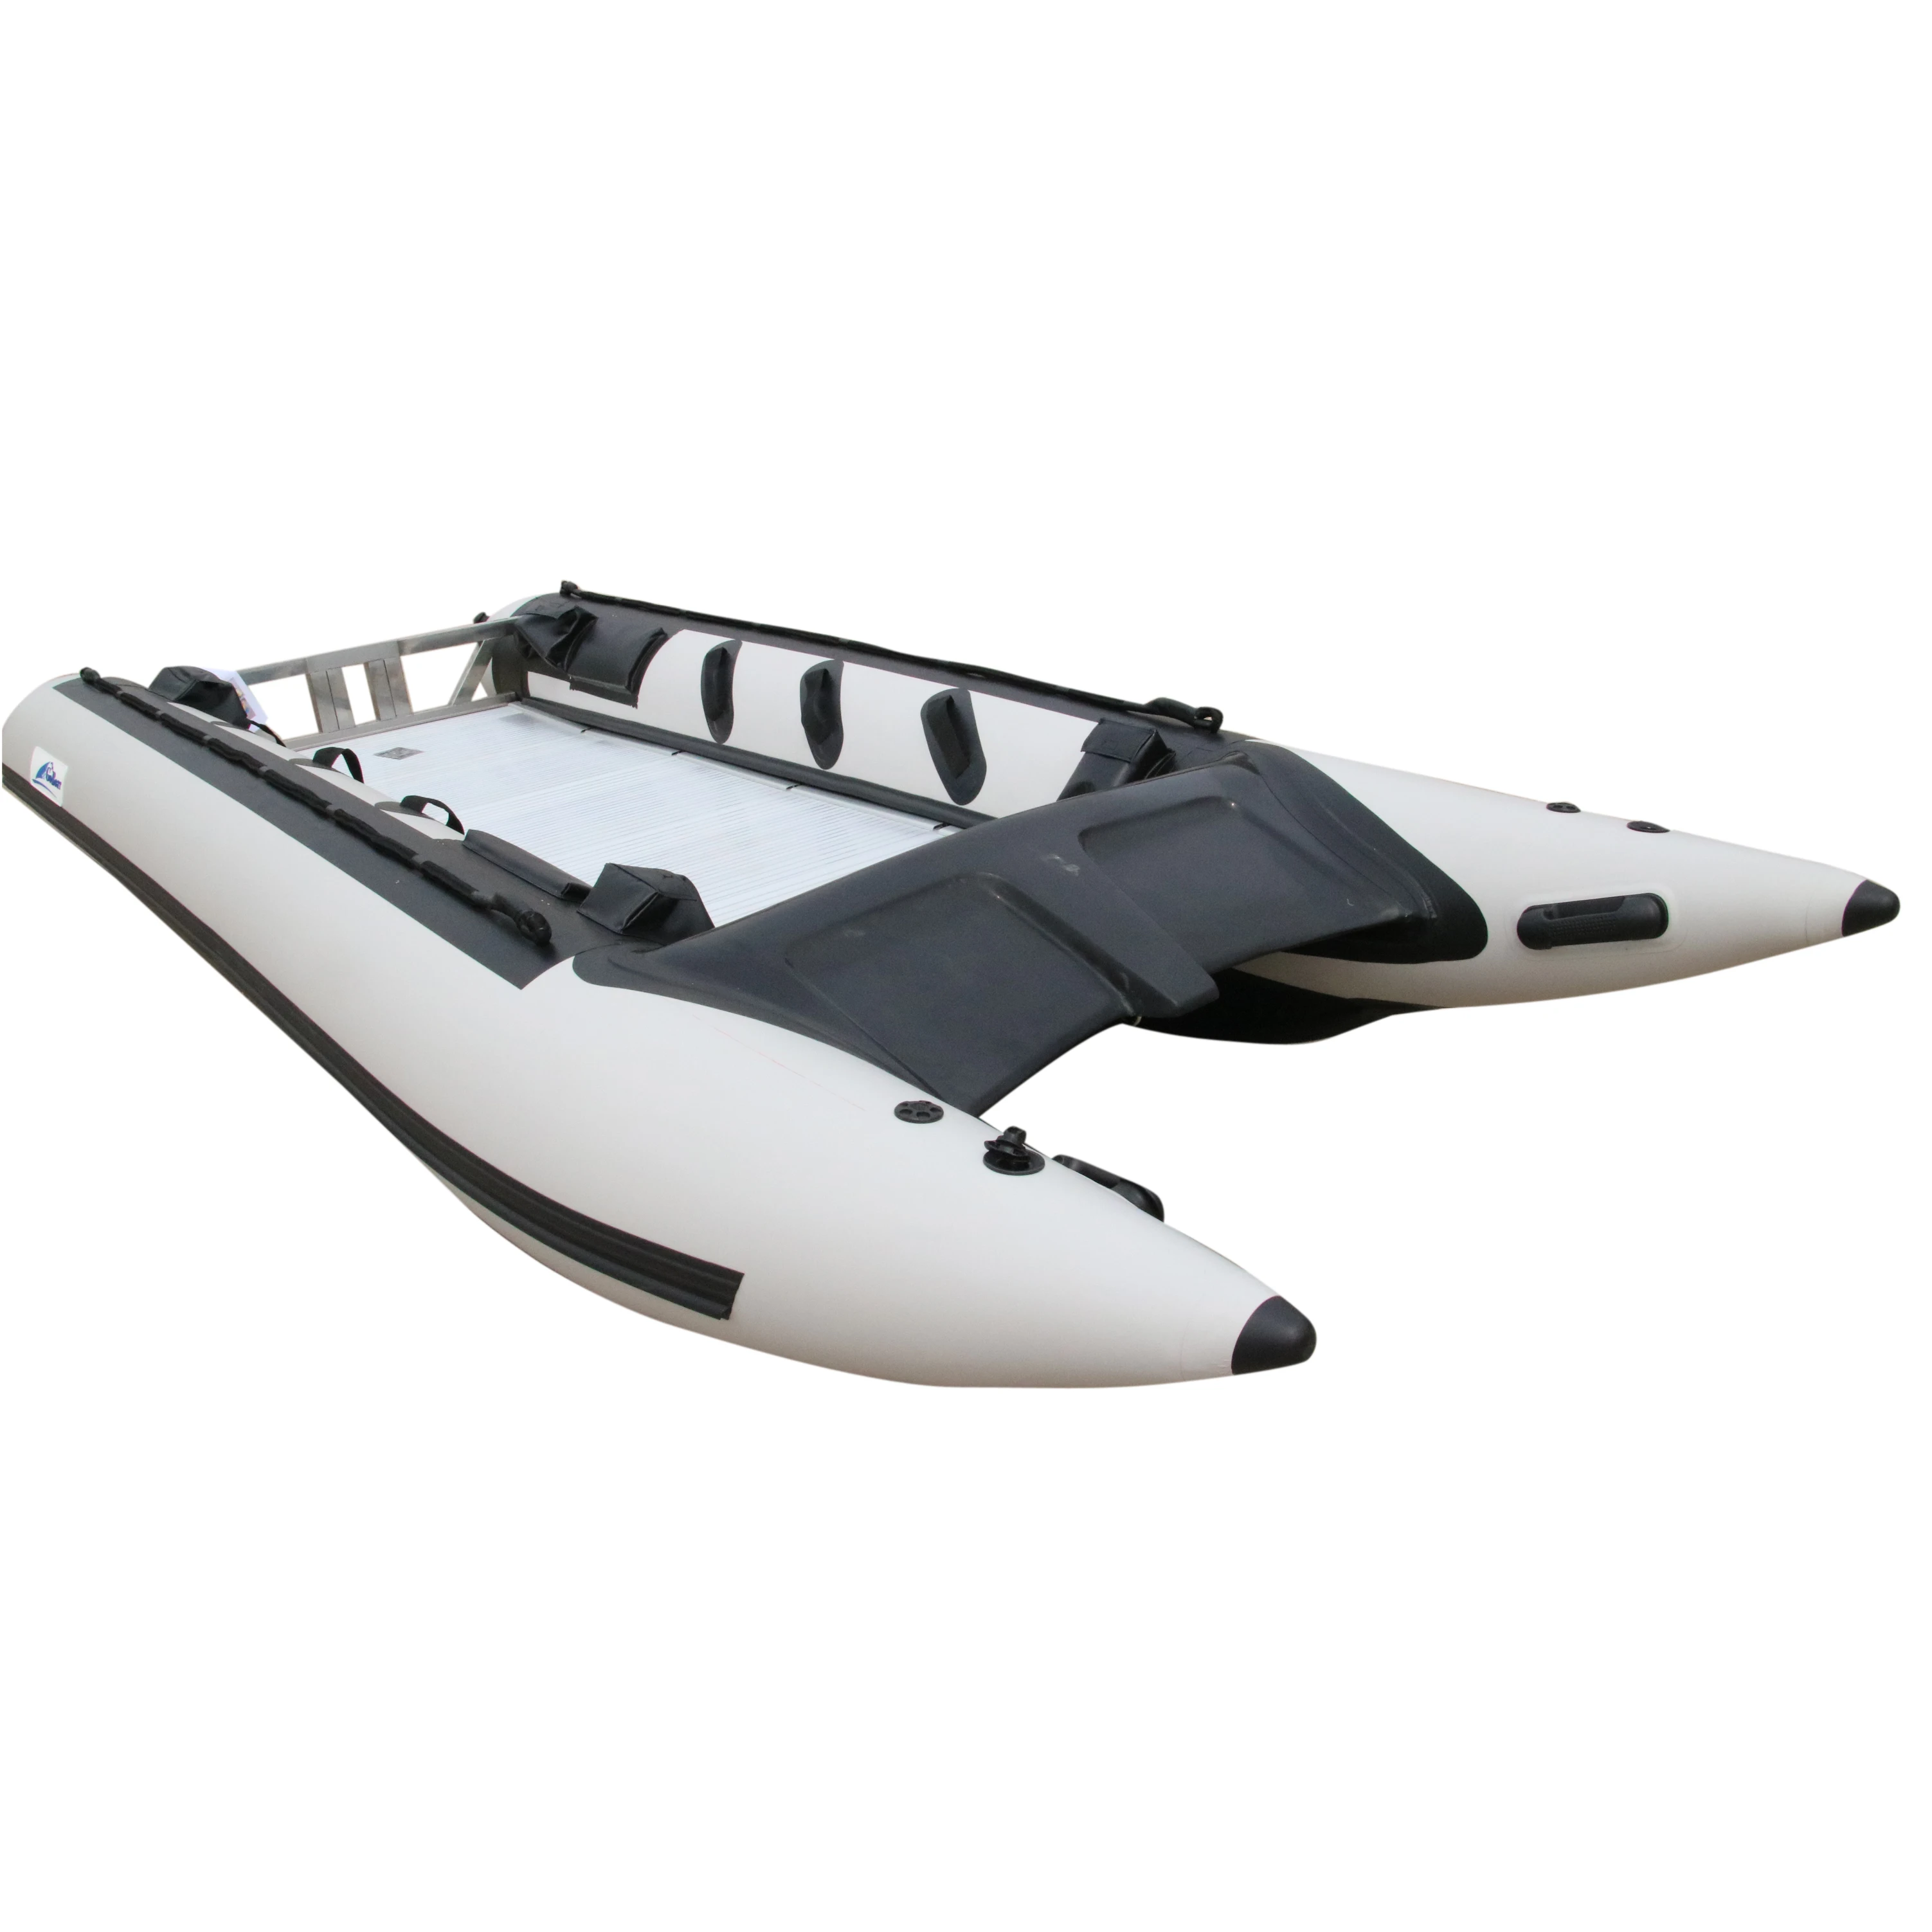 https://ae01.alicdn.com/kf/S1d8400a8414d446c885835a2459e4112C/GTG480-Outdoor-Sport-High-Speed-Catamaran-Inflatable-Fishing-Camping-Rowing-Drifting-Boat.jpg